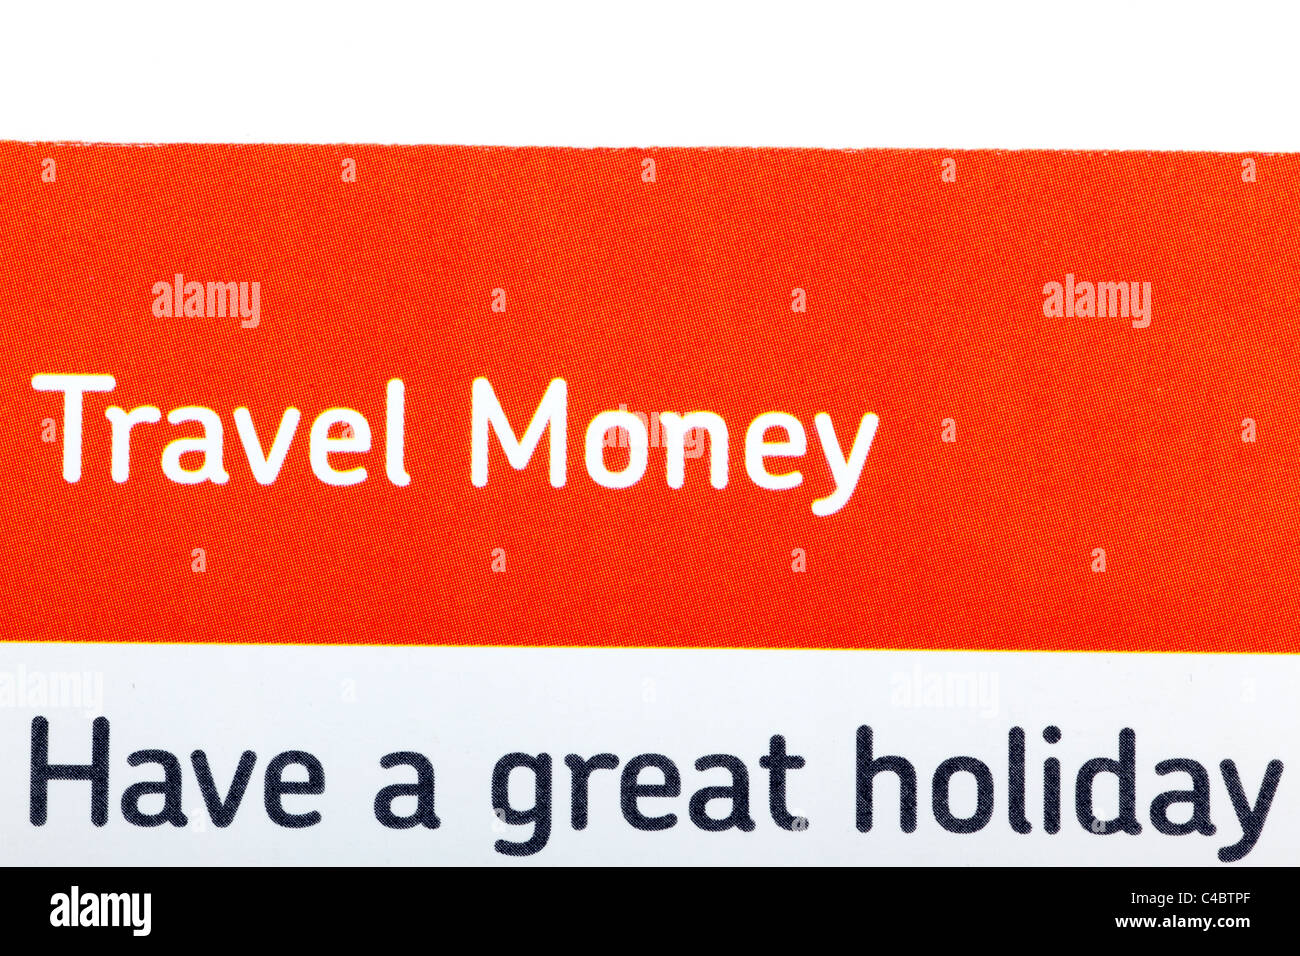 Travel money sign in orange with white writing Stock Photo